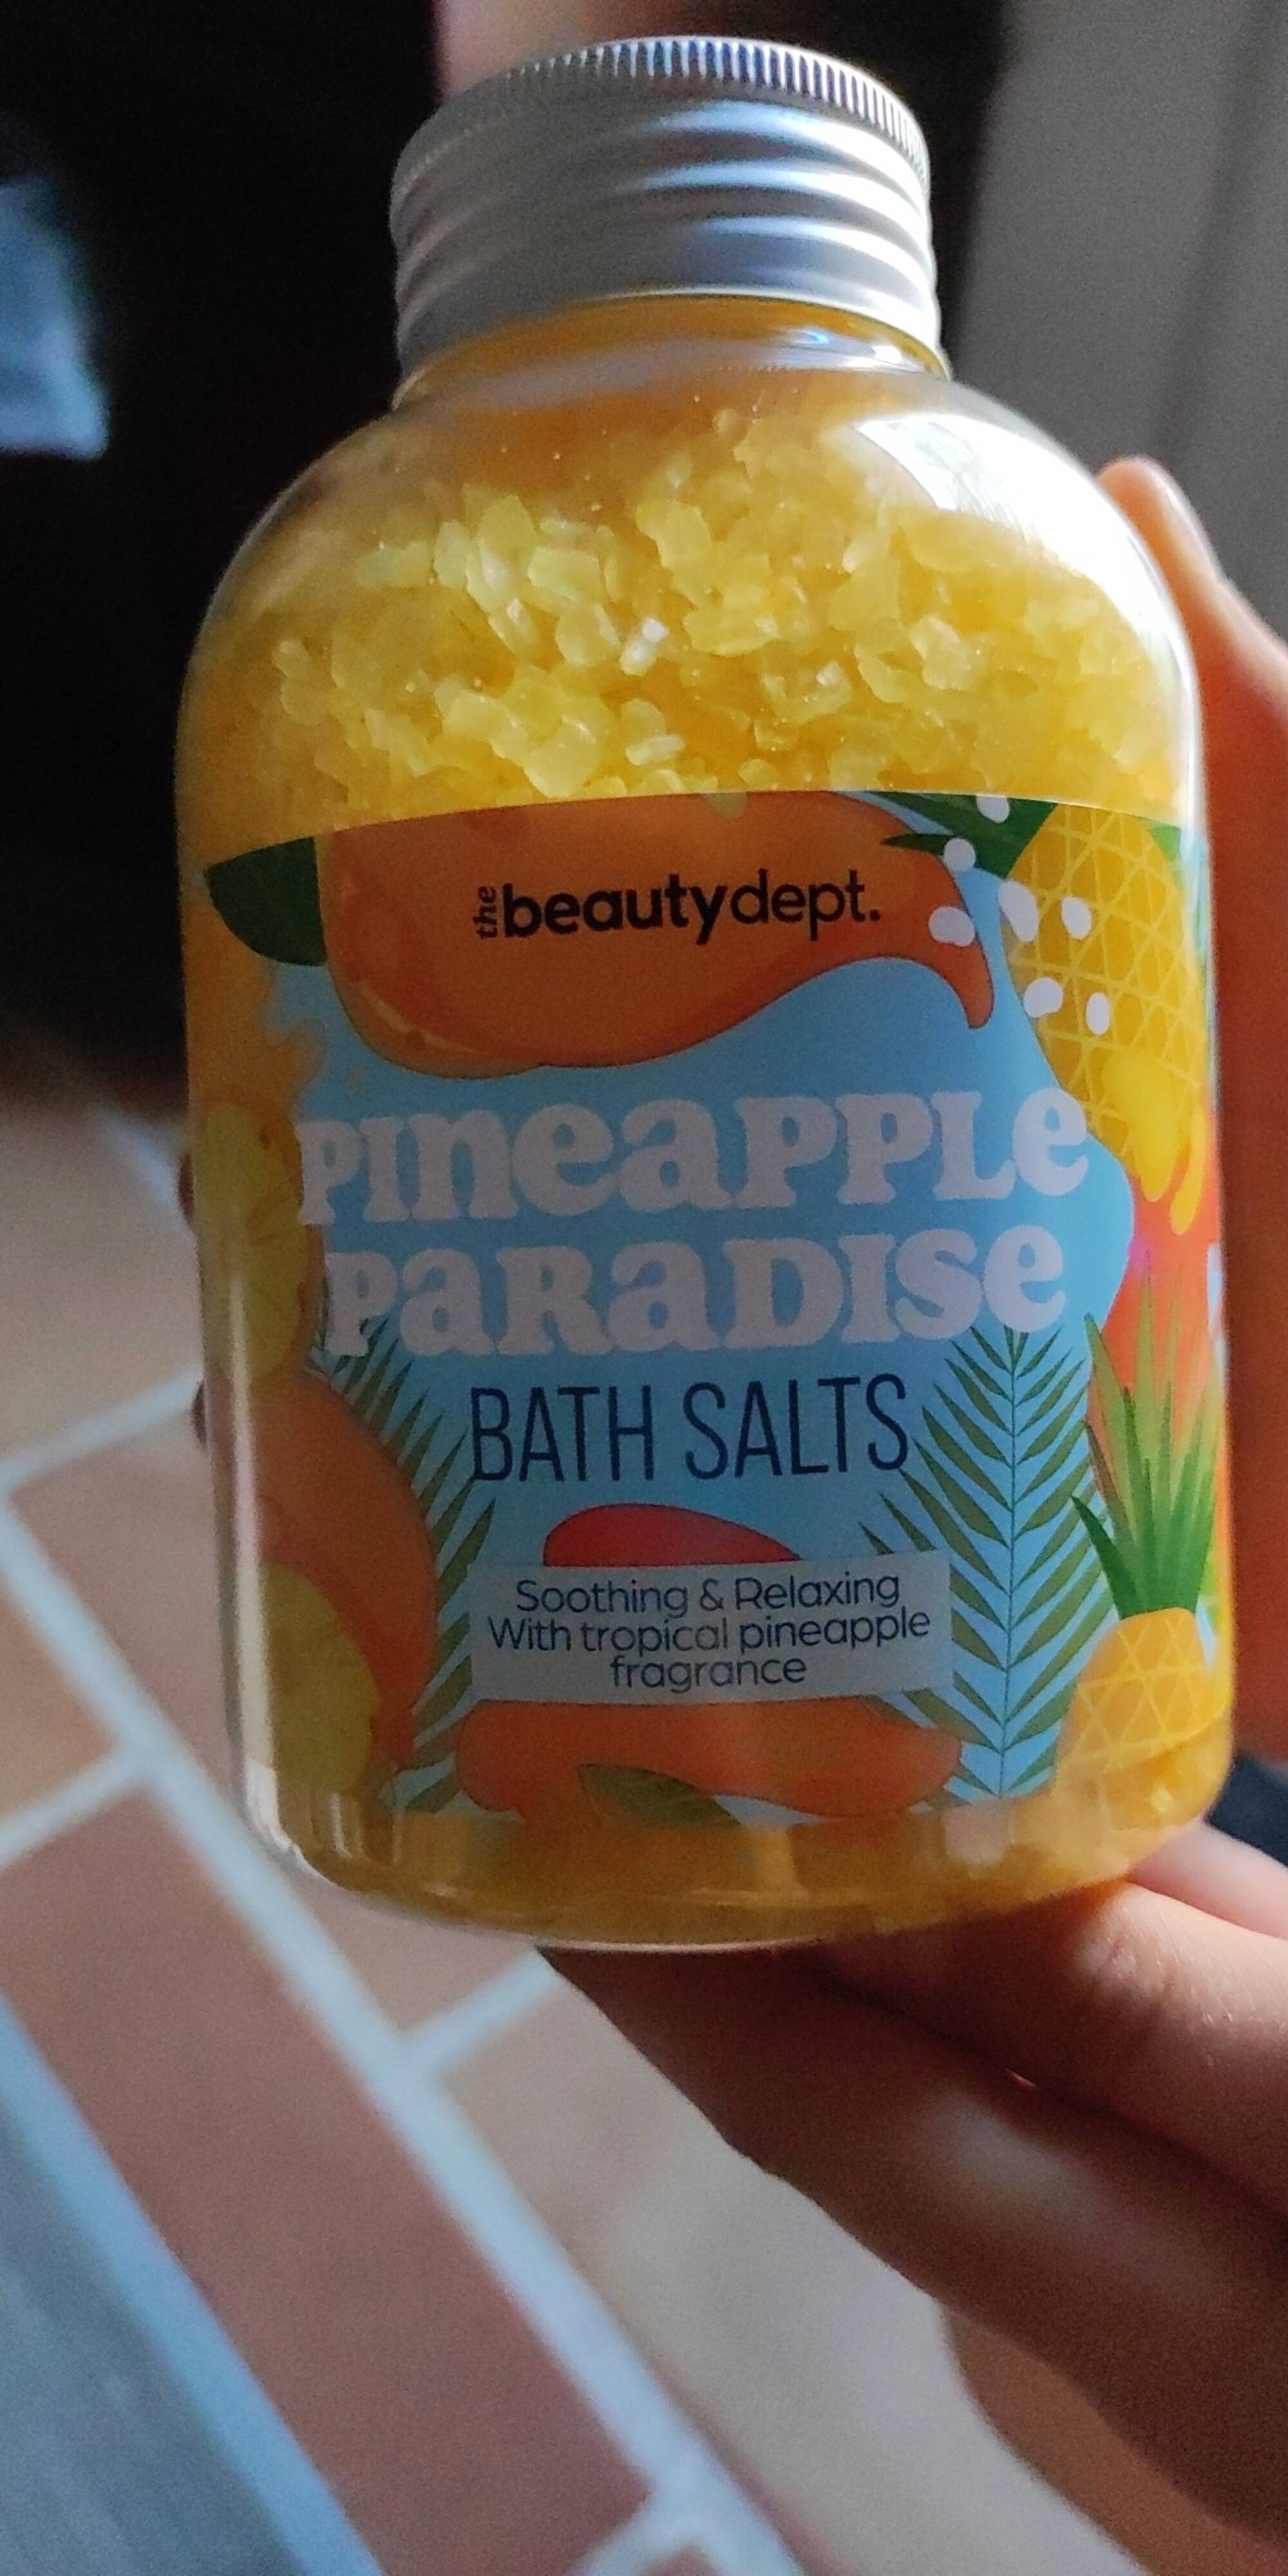 THE BEAUTY DEPT - Pineapple paradise - Bath salts